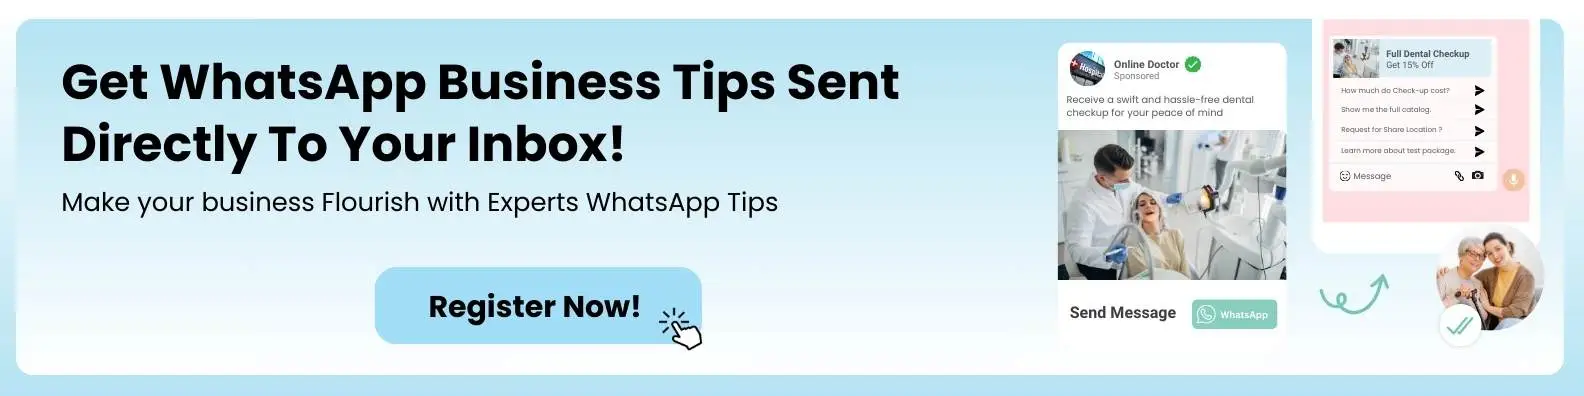 get-whatsapp-business